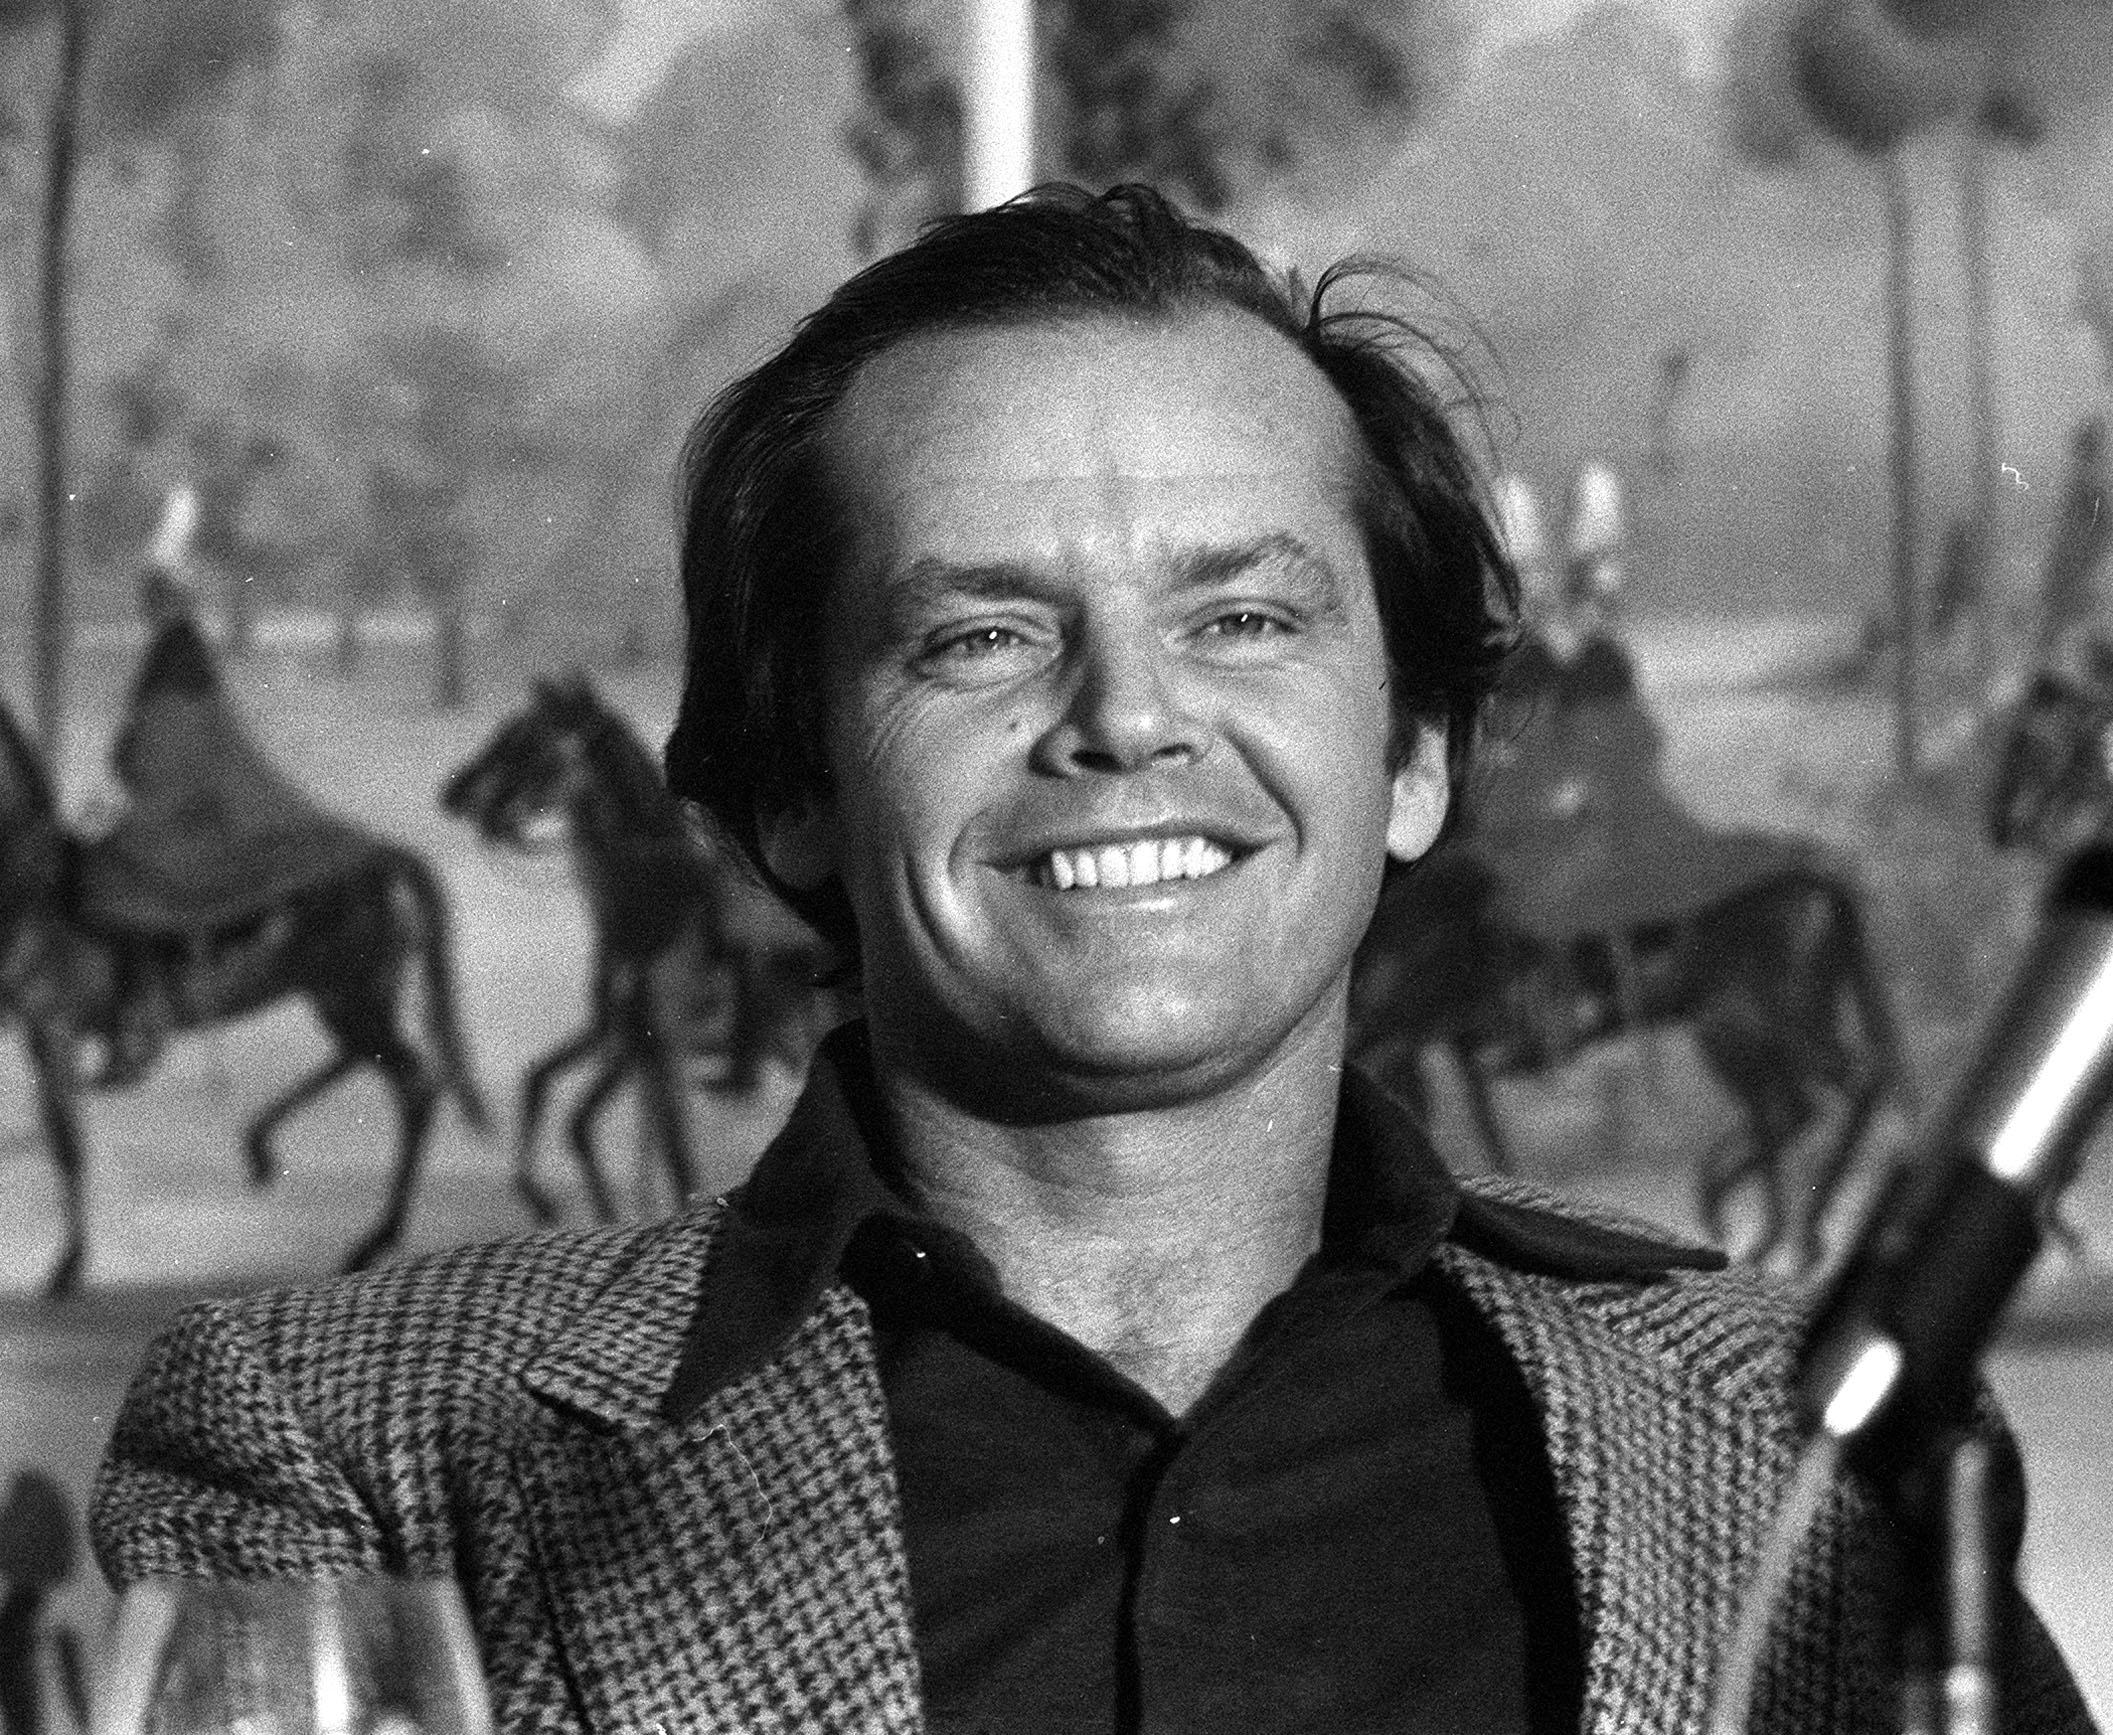 Jack Nicholson wearing a suit jacket